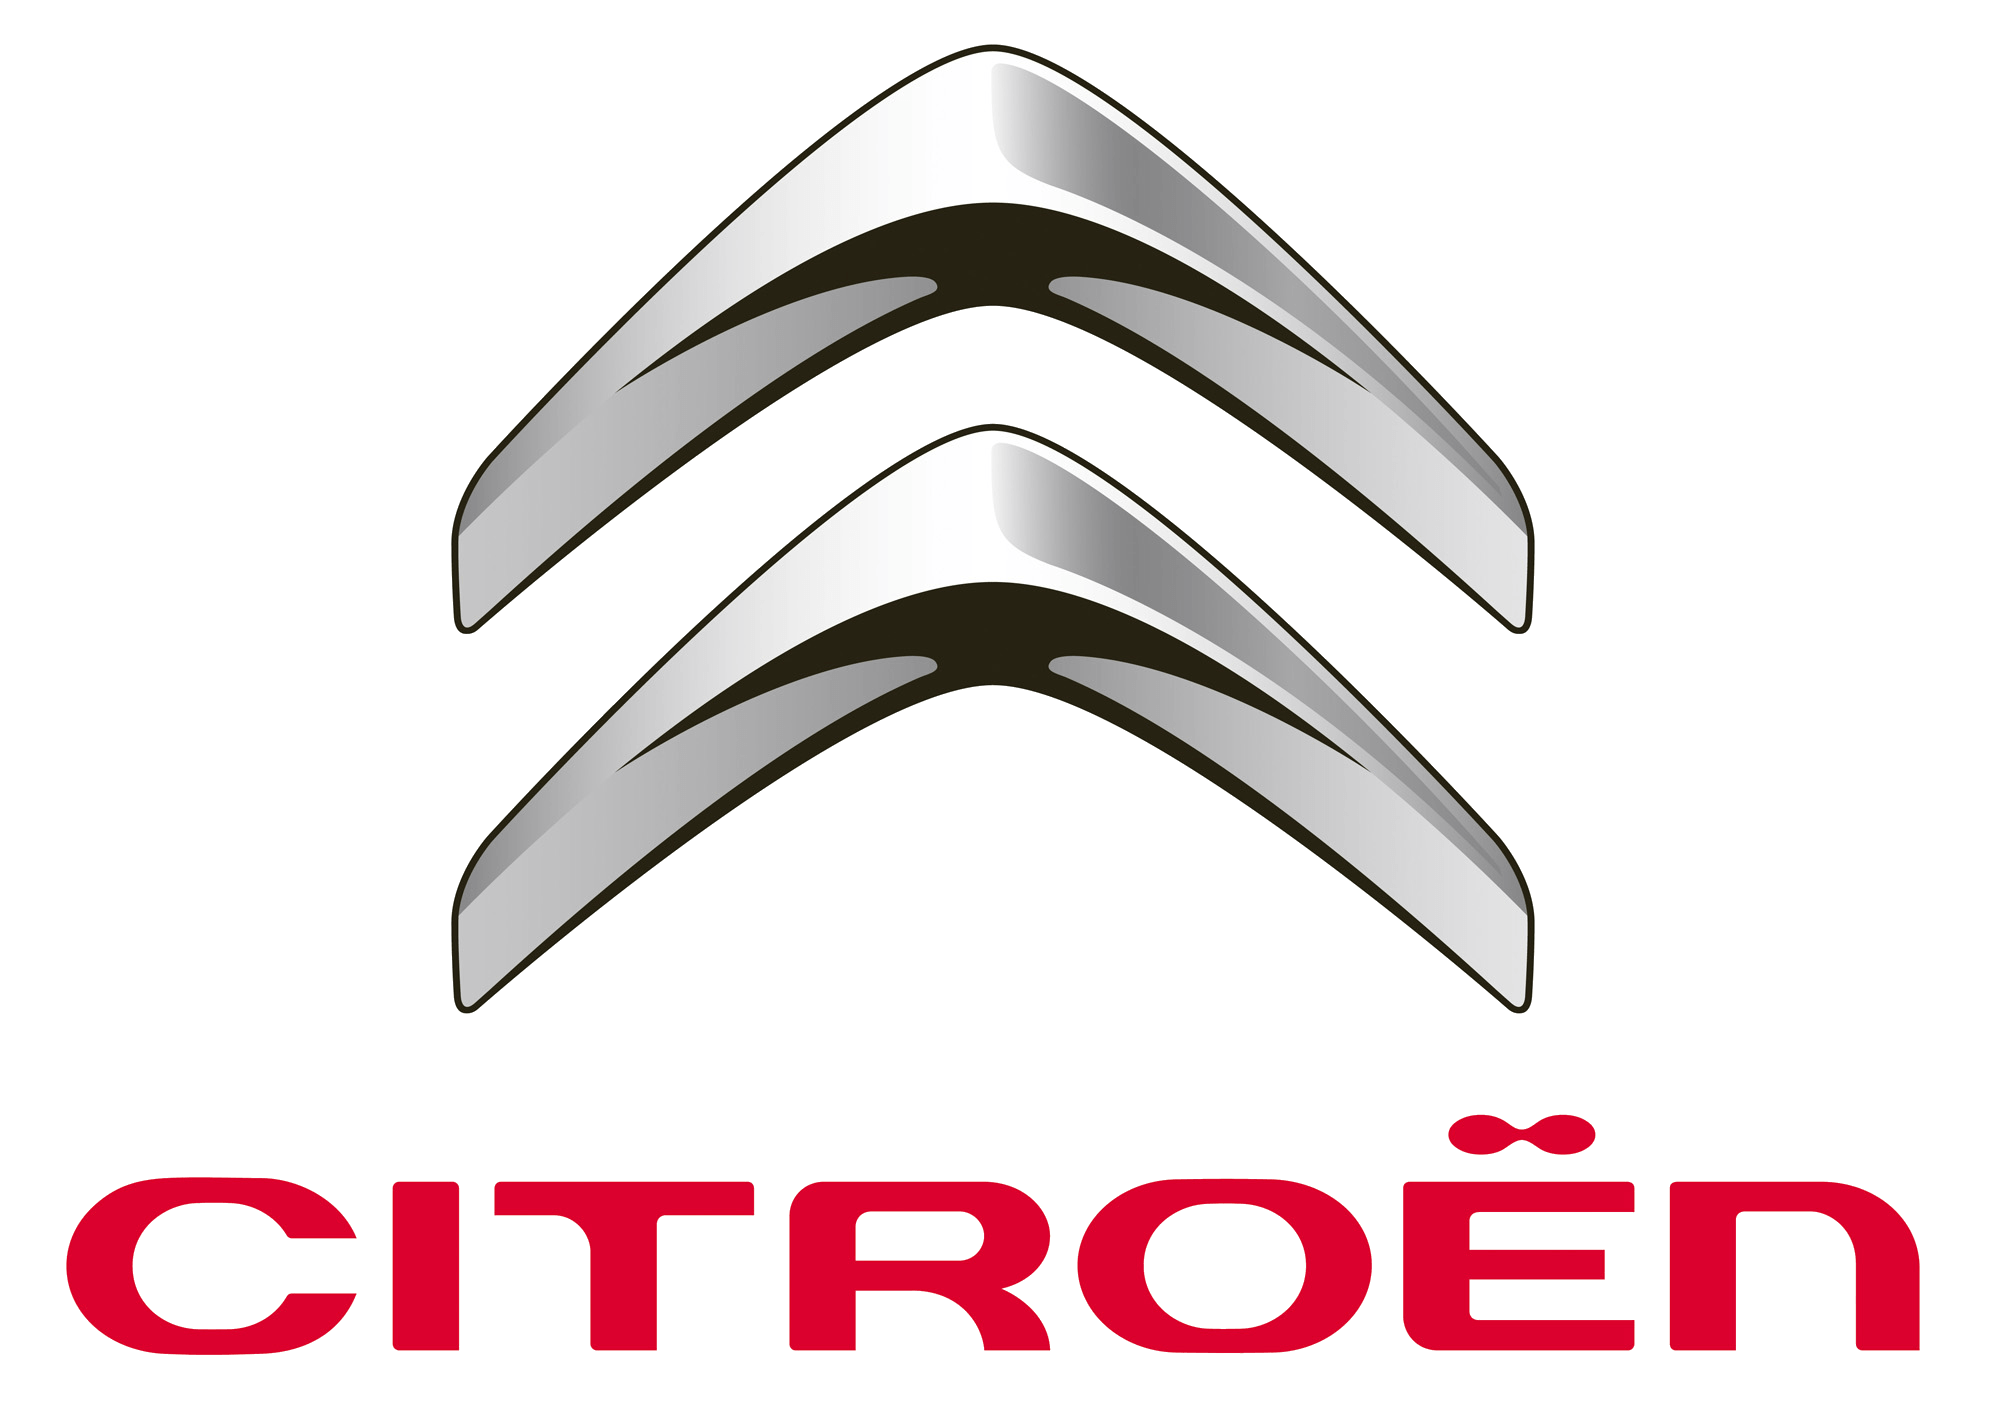 Silver Boomerang Logo - Citroen Logo, Citroen Car Symbol Meaning and History | Car Brand ...